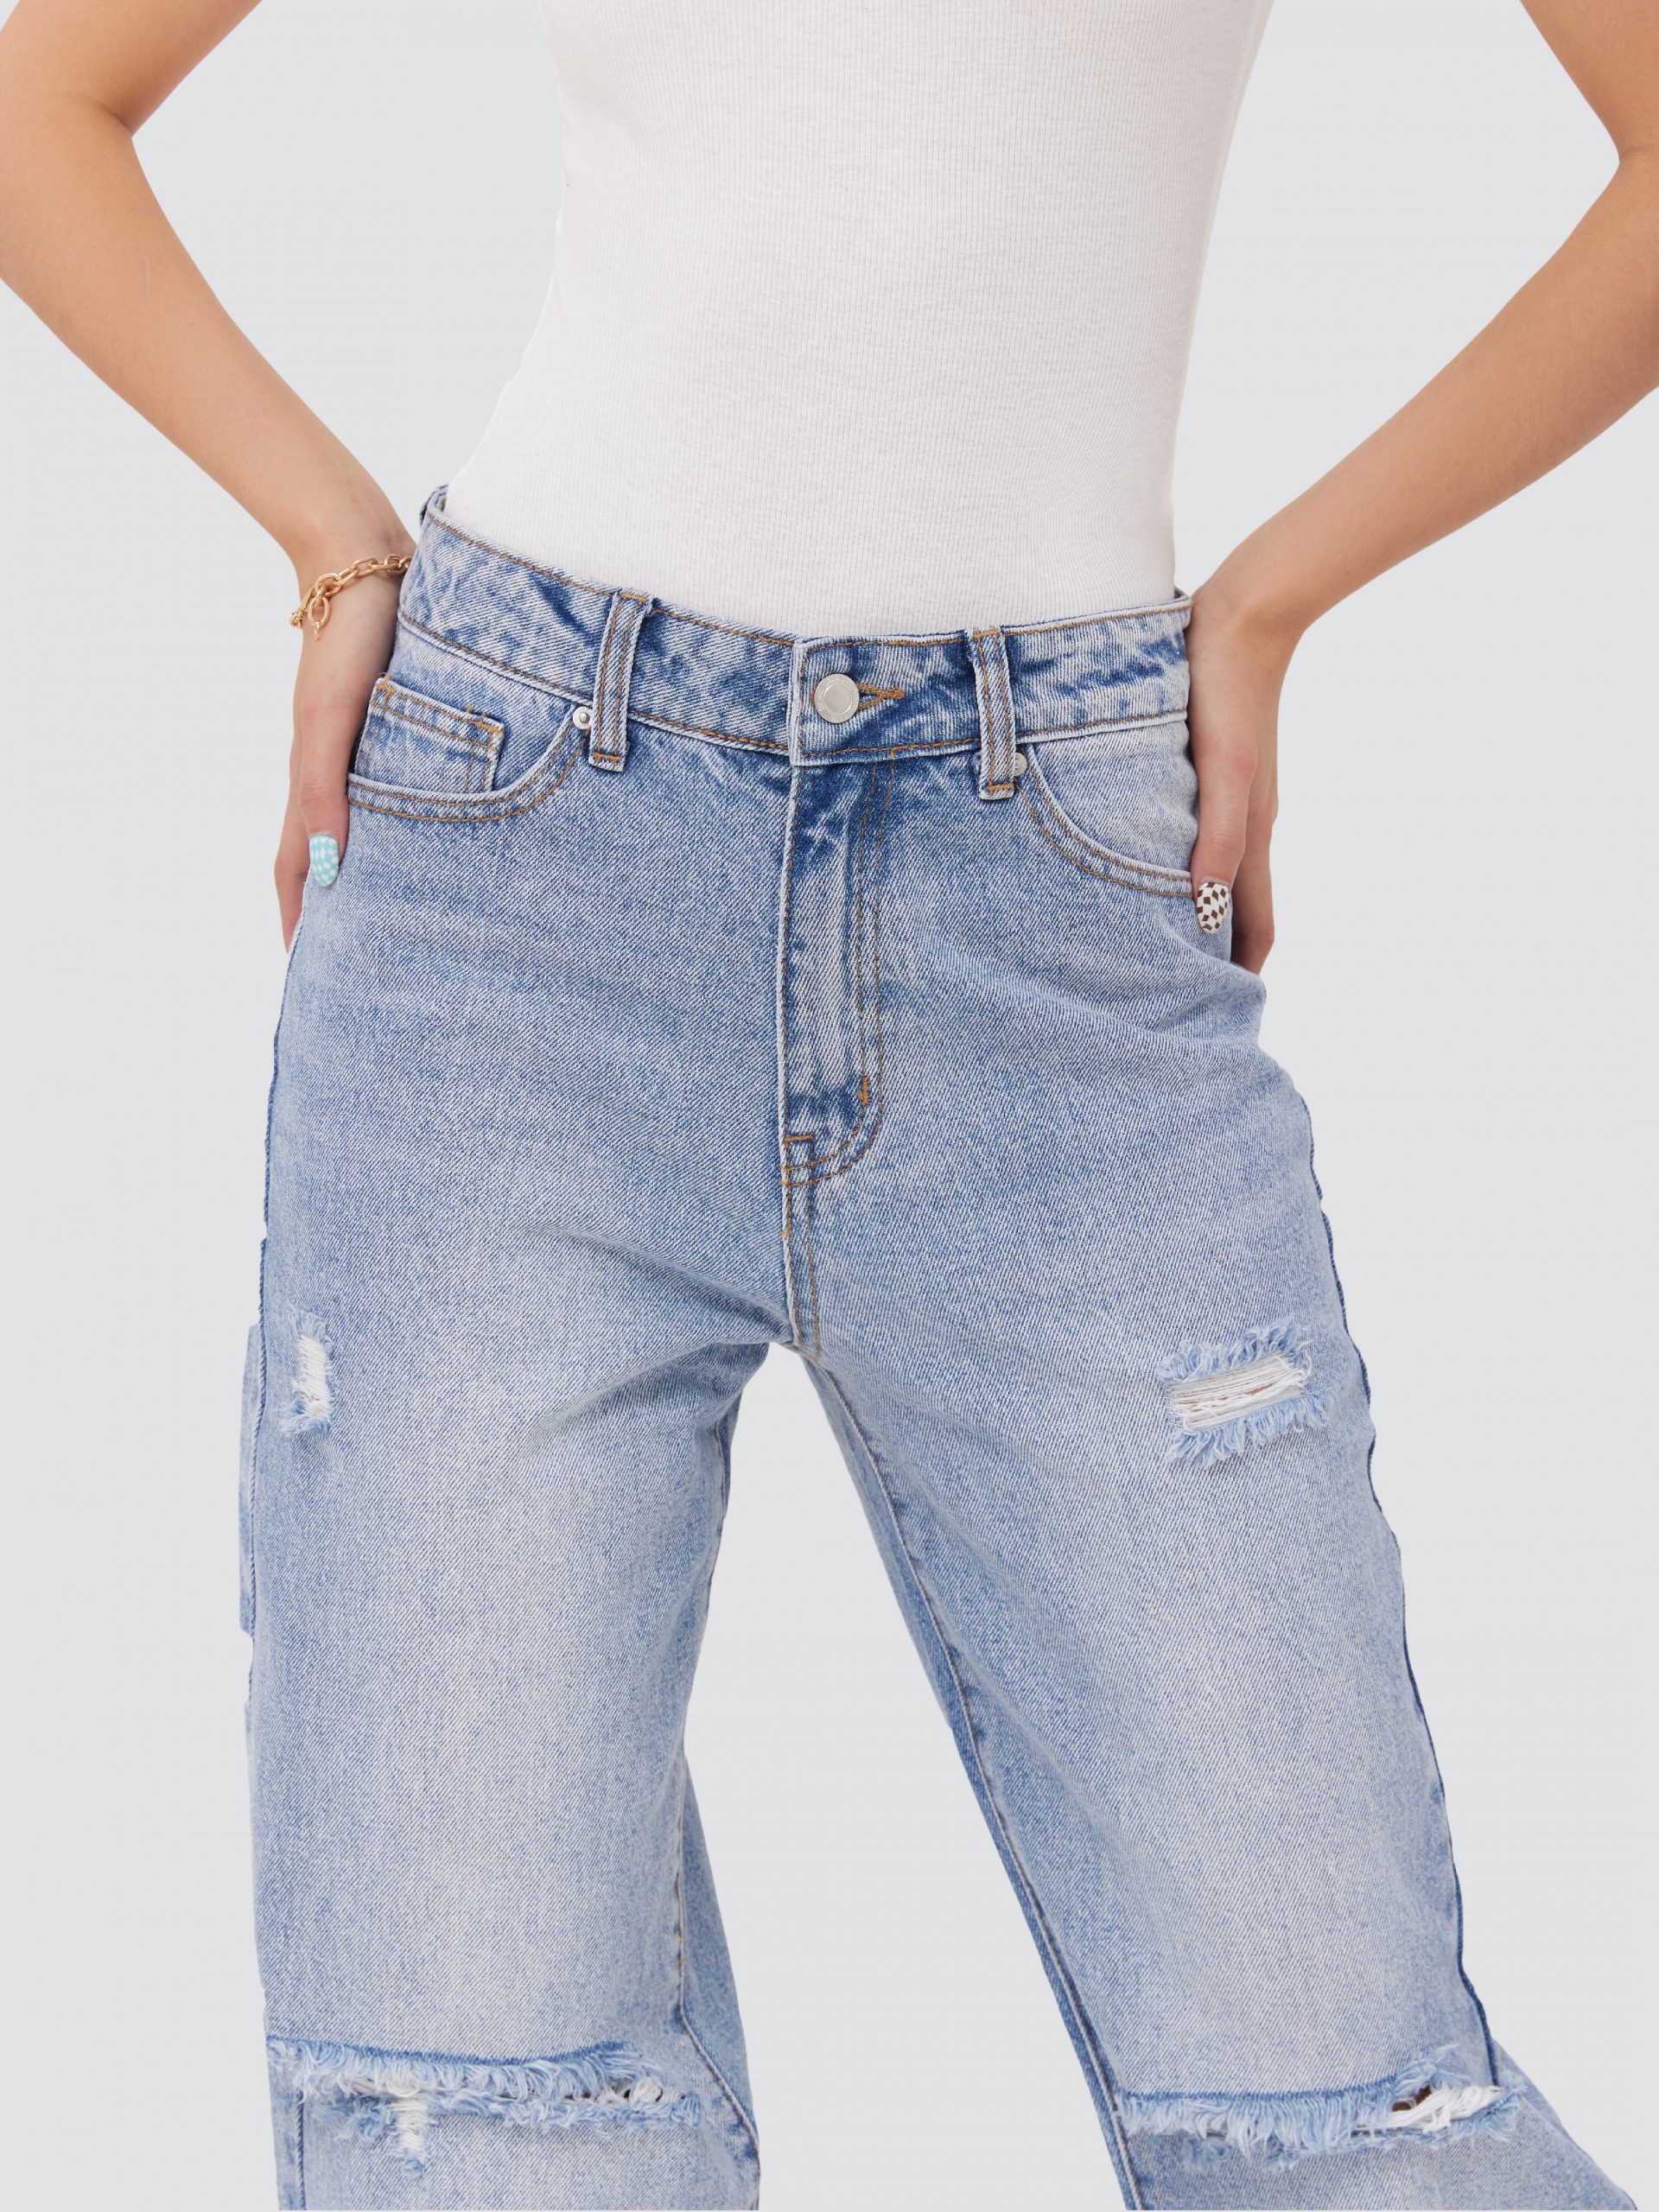 là min - Quần jeans low rise ripped denim